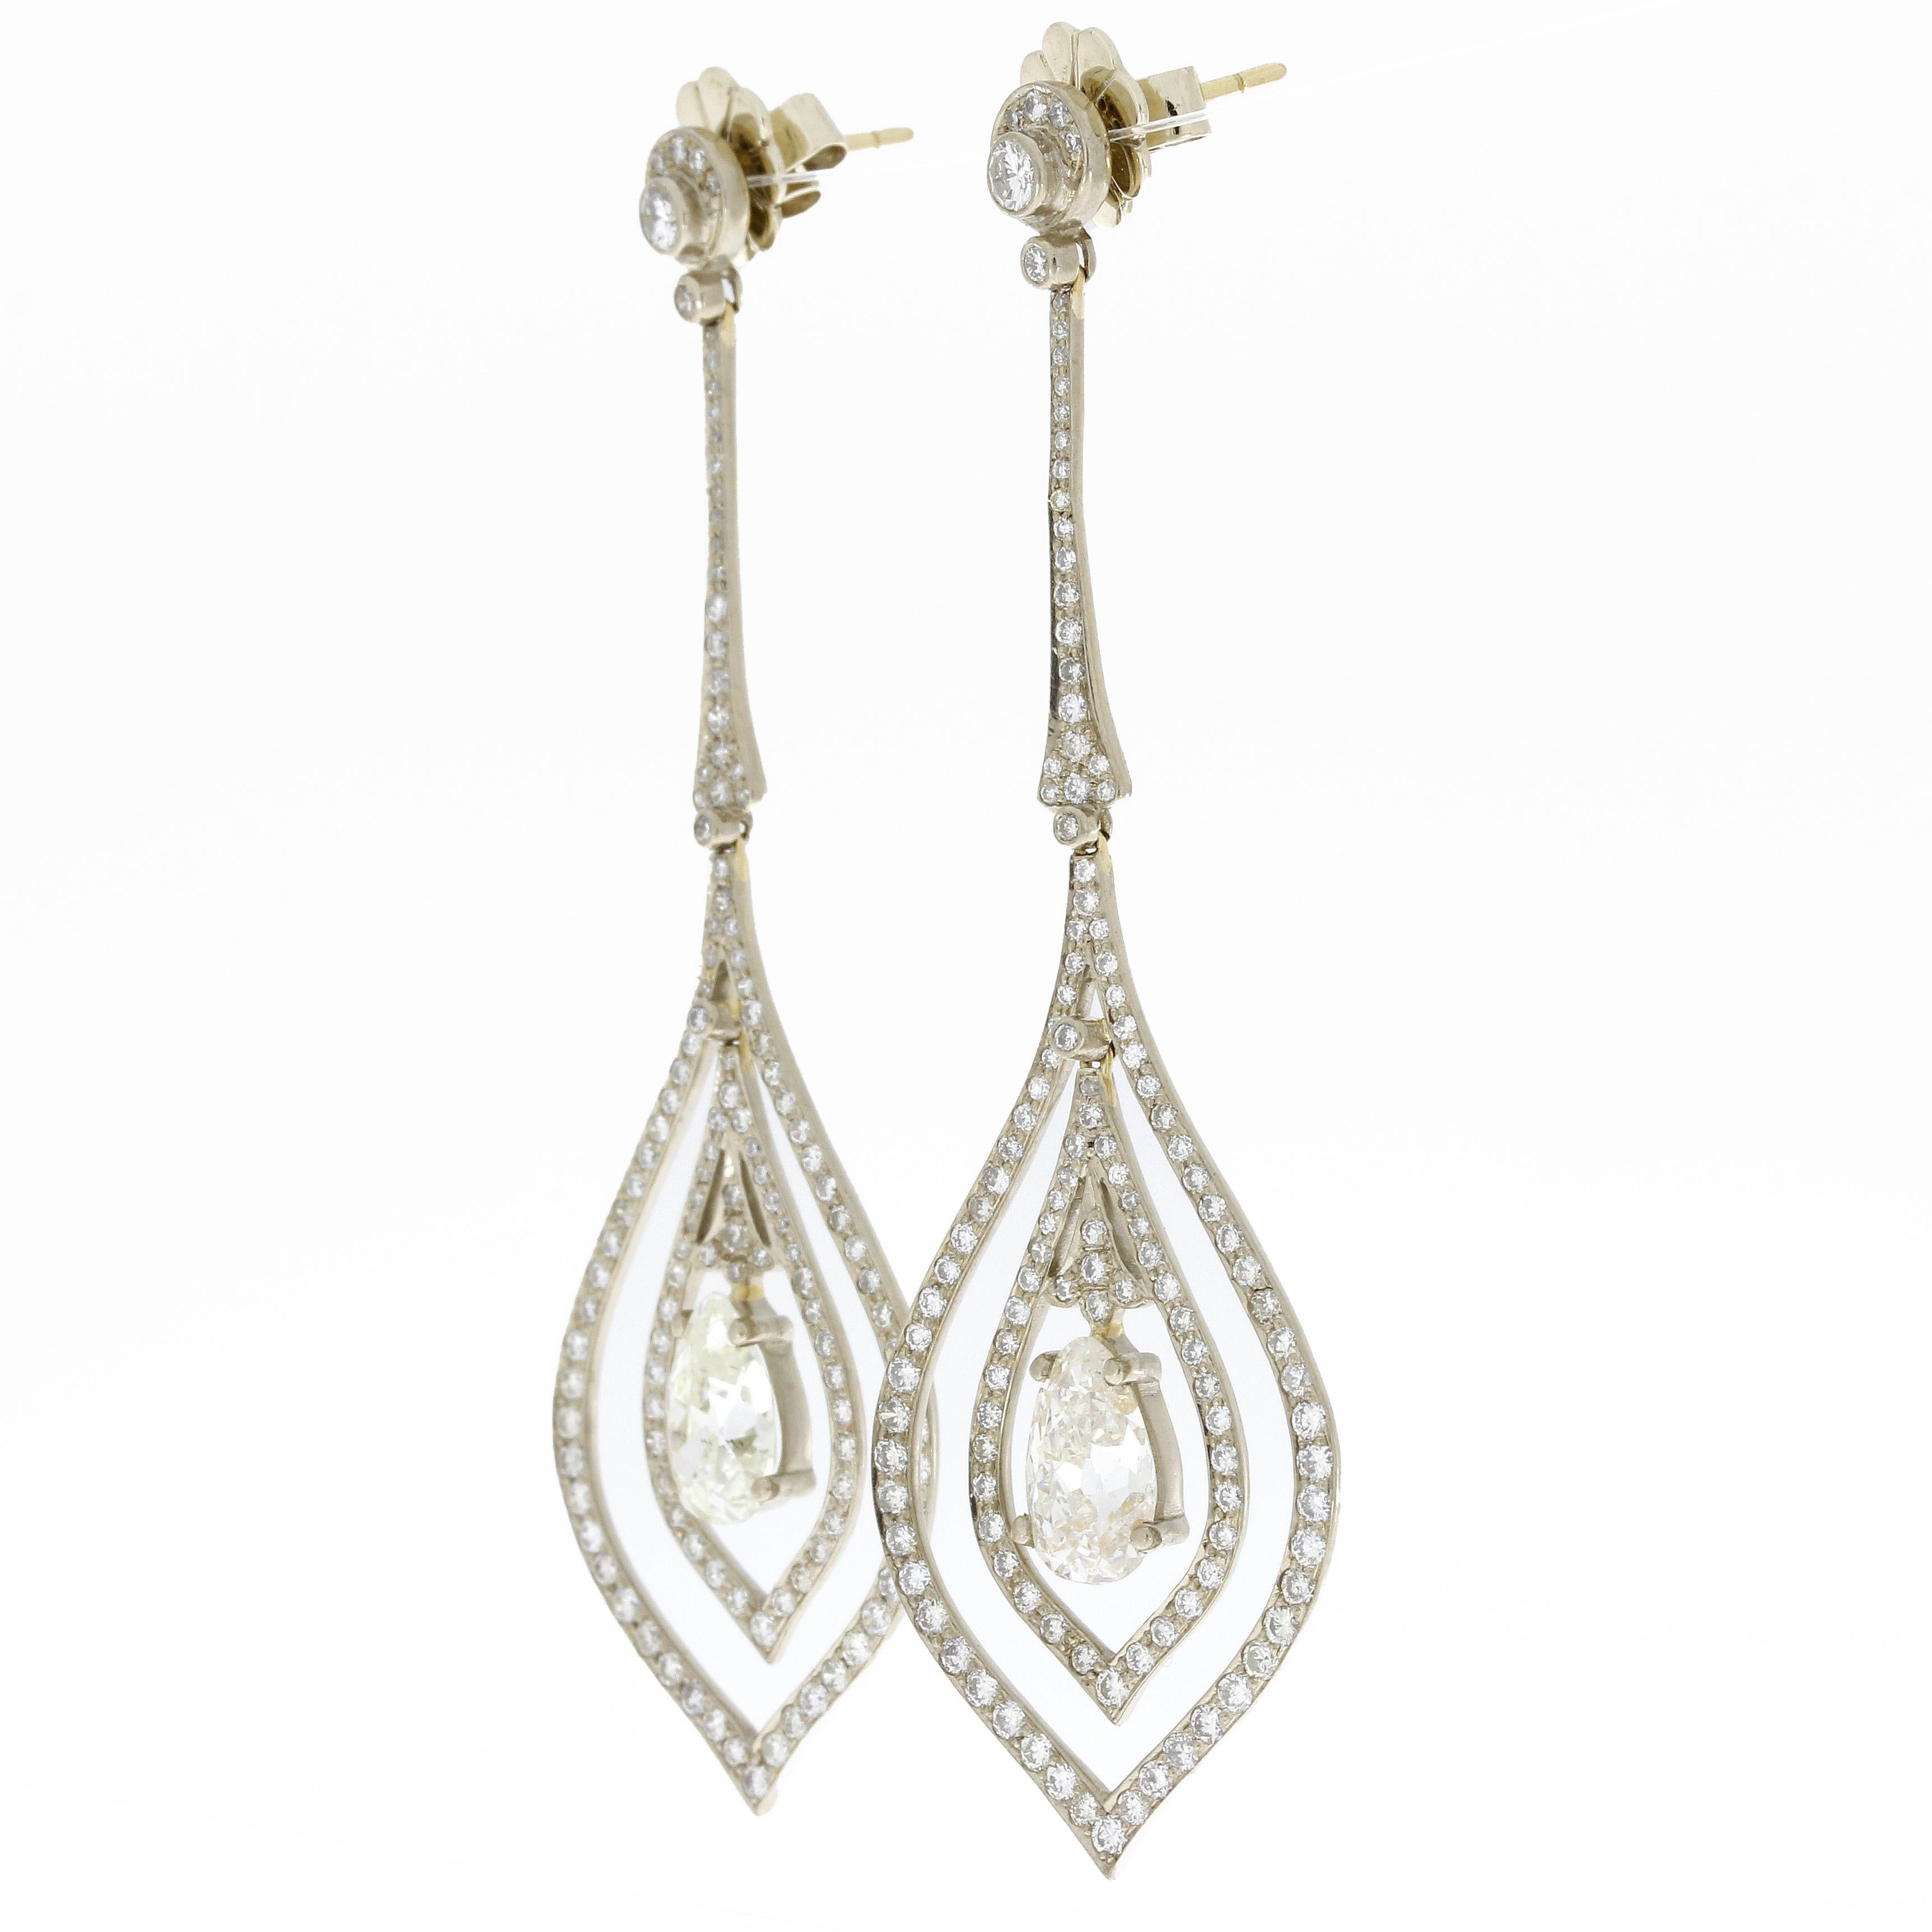 GIA Certified 18k White Gold Pear Shaped Diamond Earrings
Pear Shape 1.64 carat / Color J / Clarity I1
Pear Shape 1.67 carat / Color K / Clarity SI1
approx. 2.5 carat additional Diamonds